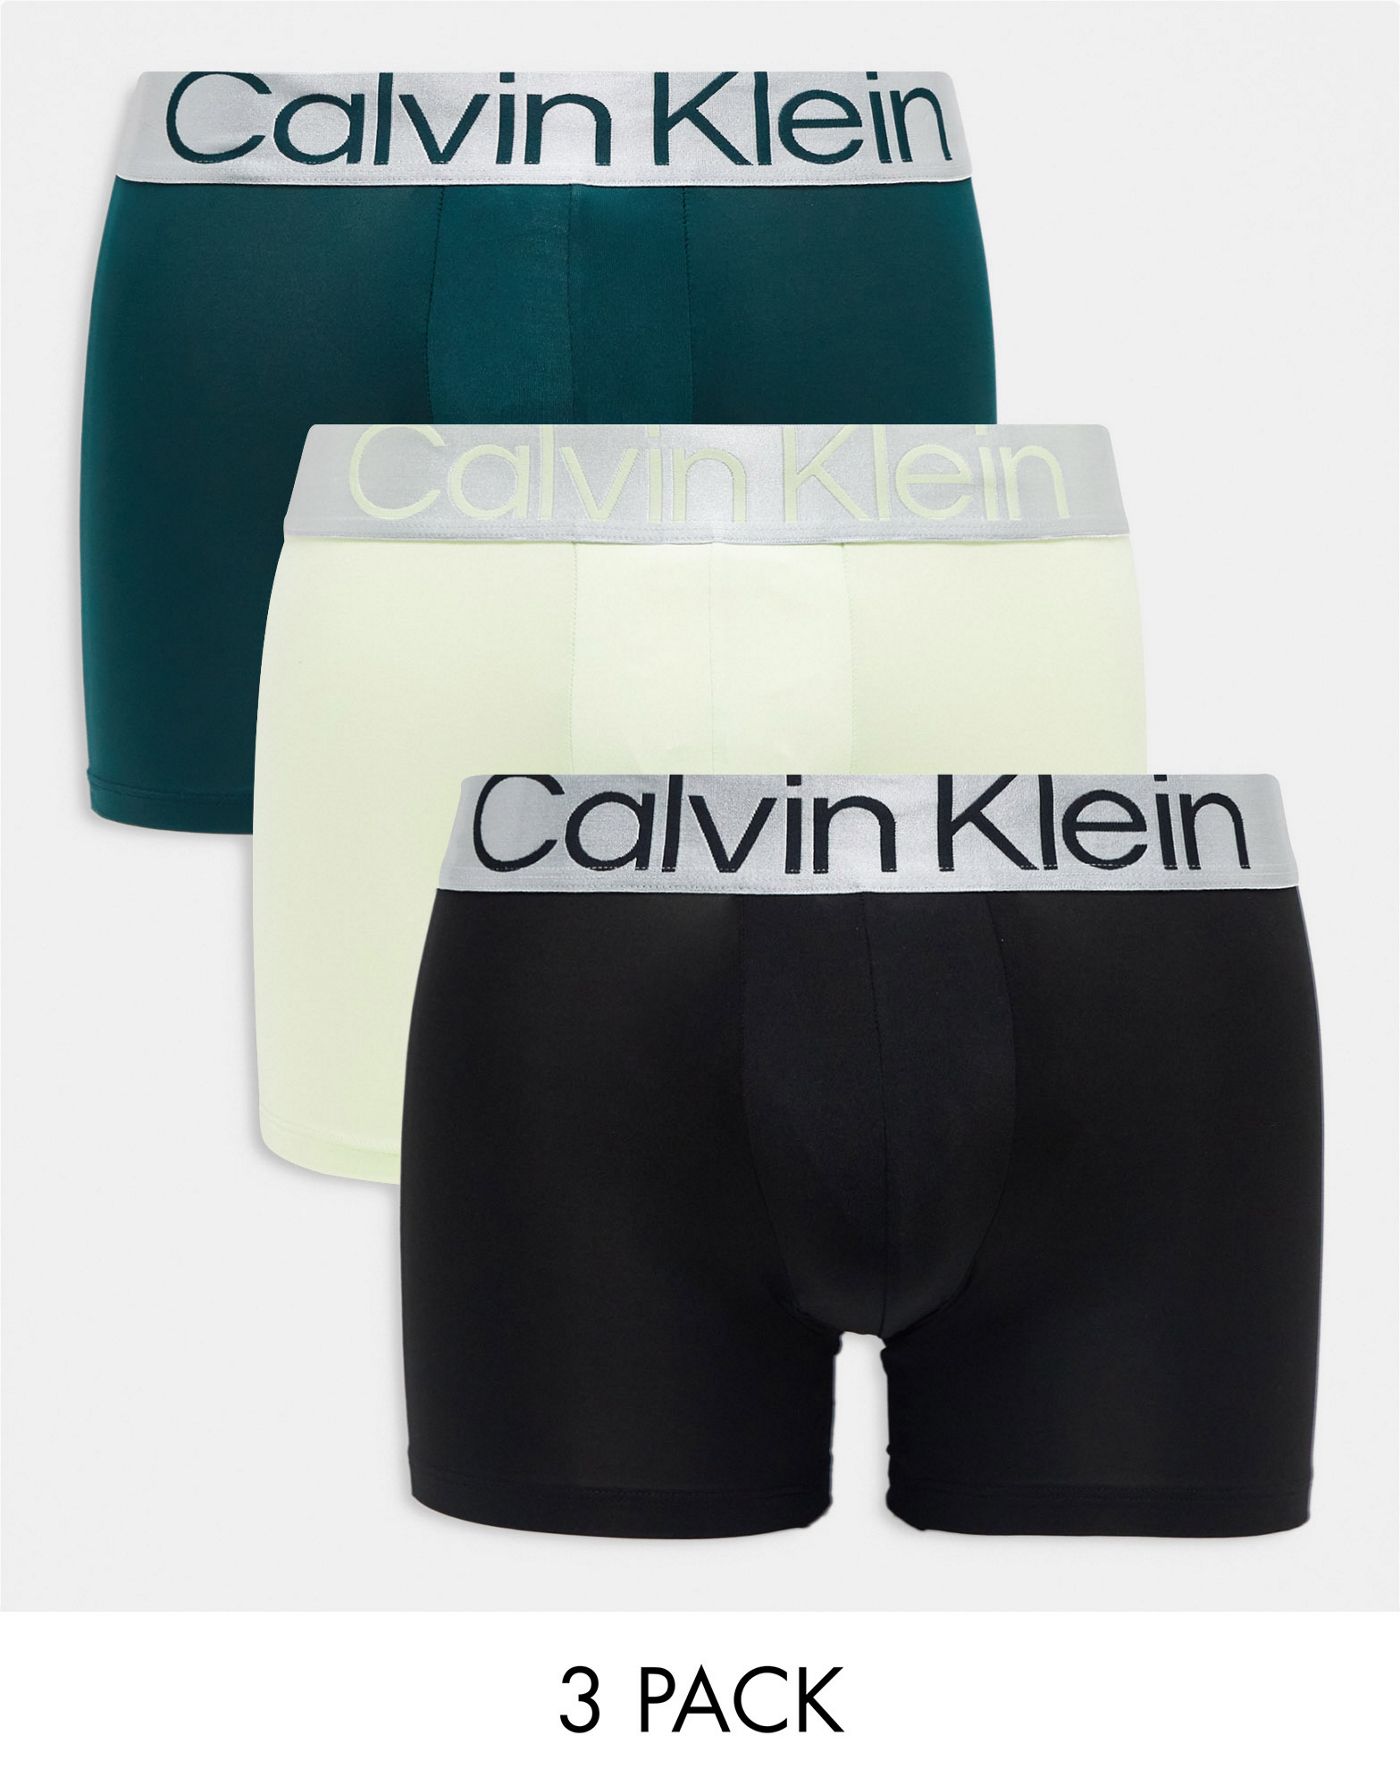 Calvin Klein cotton steel 3 pack stretch micro trunks in multi